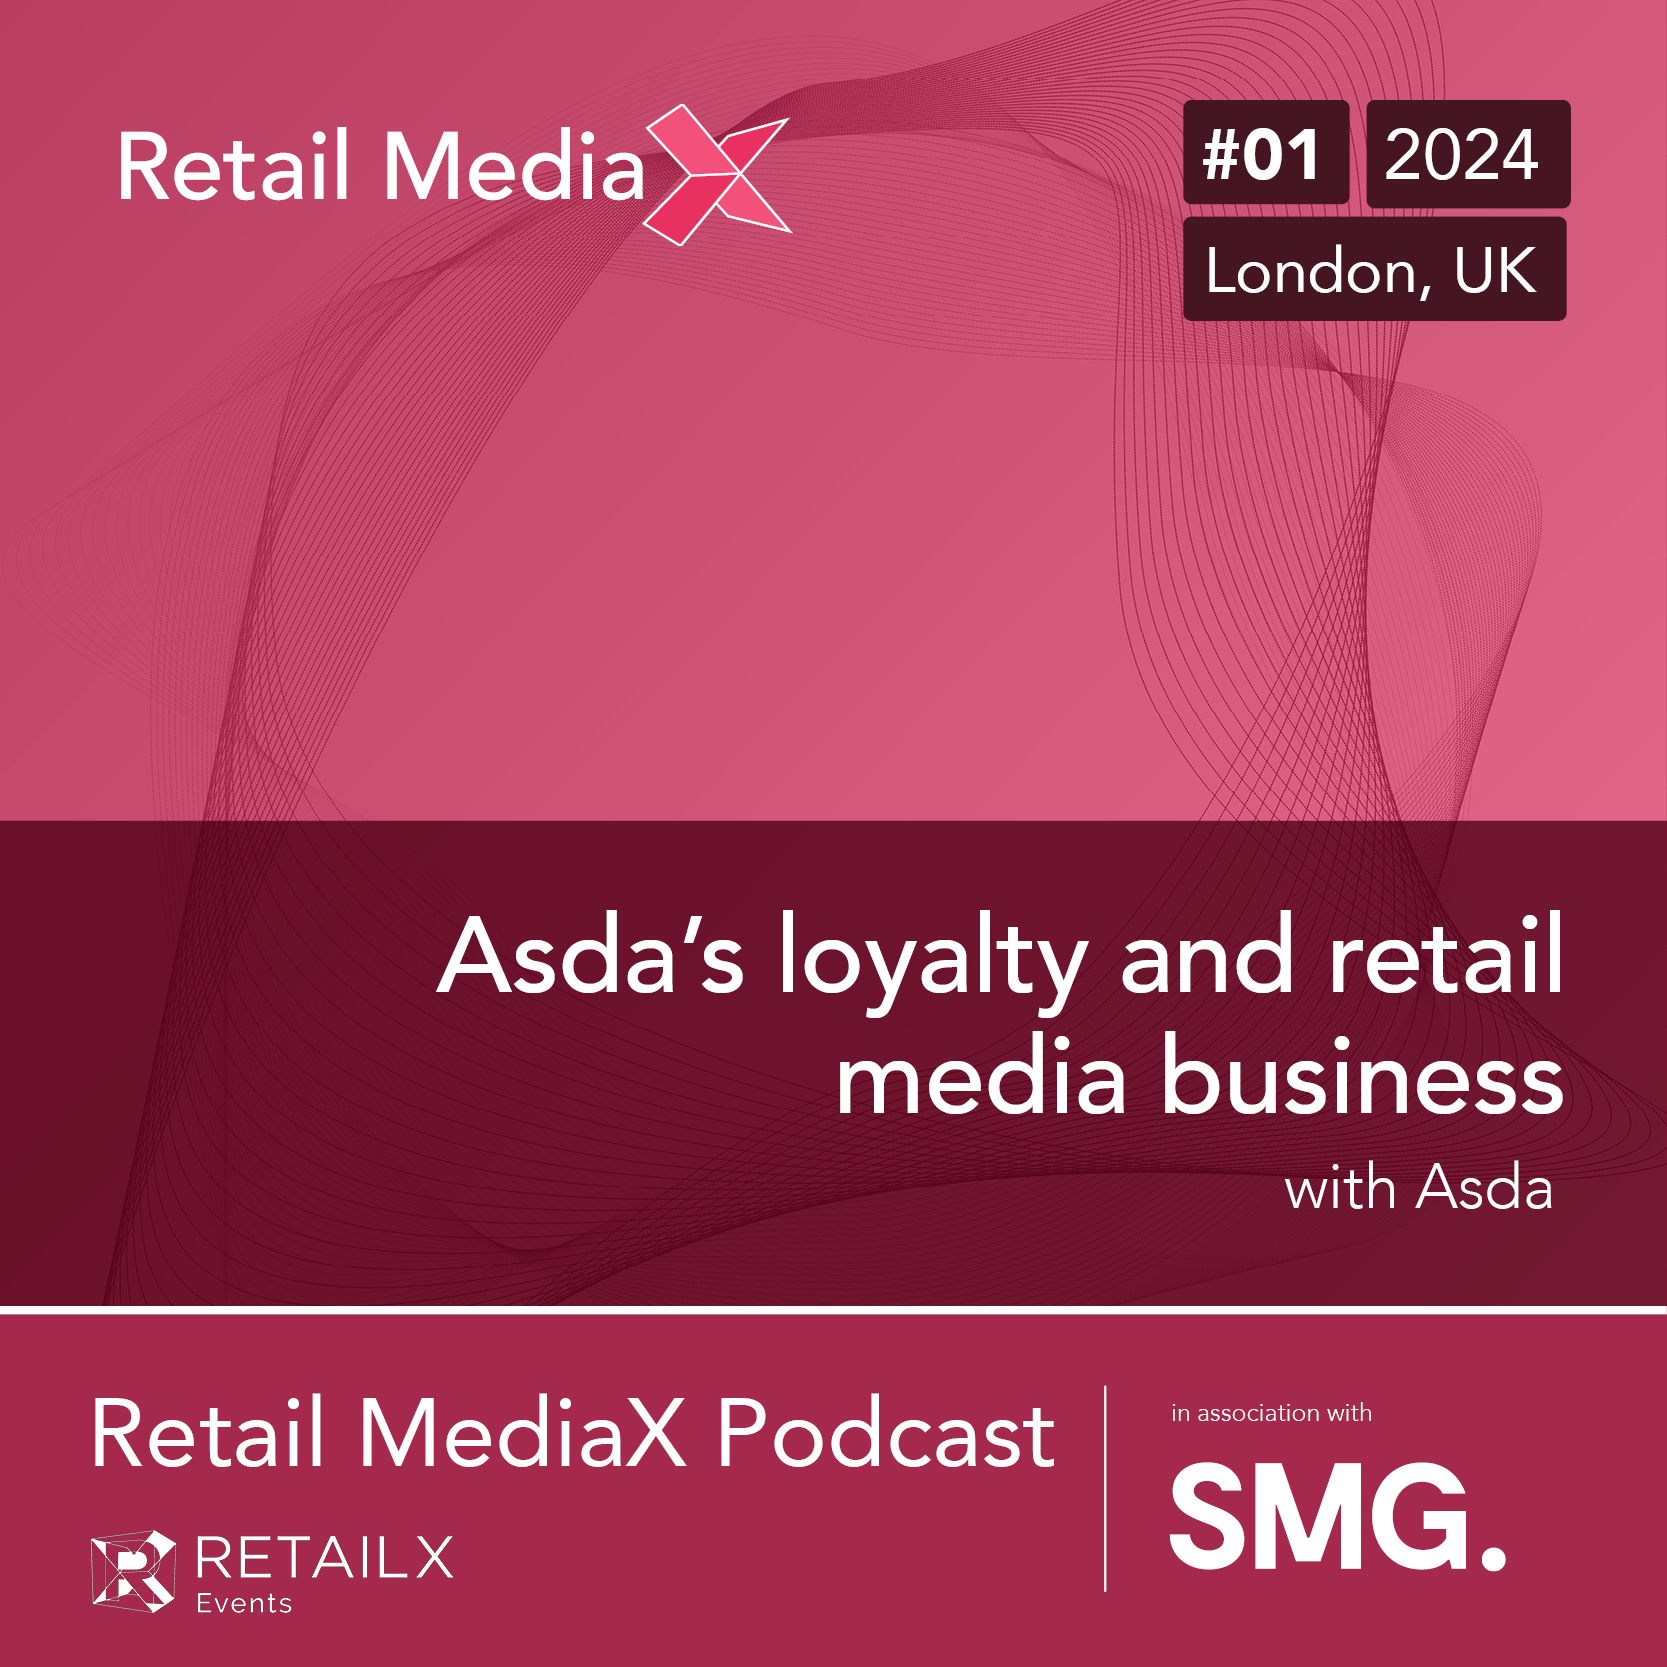 Retail MediaX Podcast - Asda